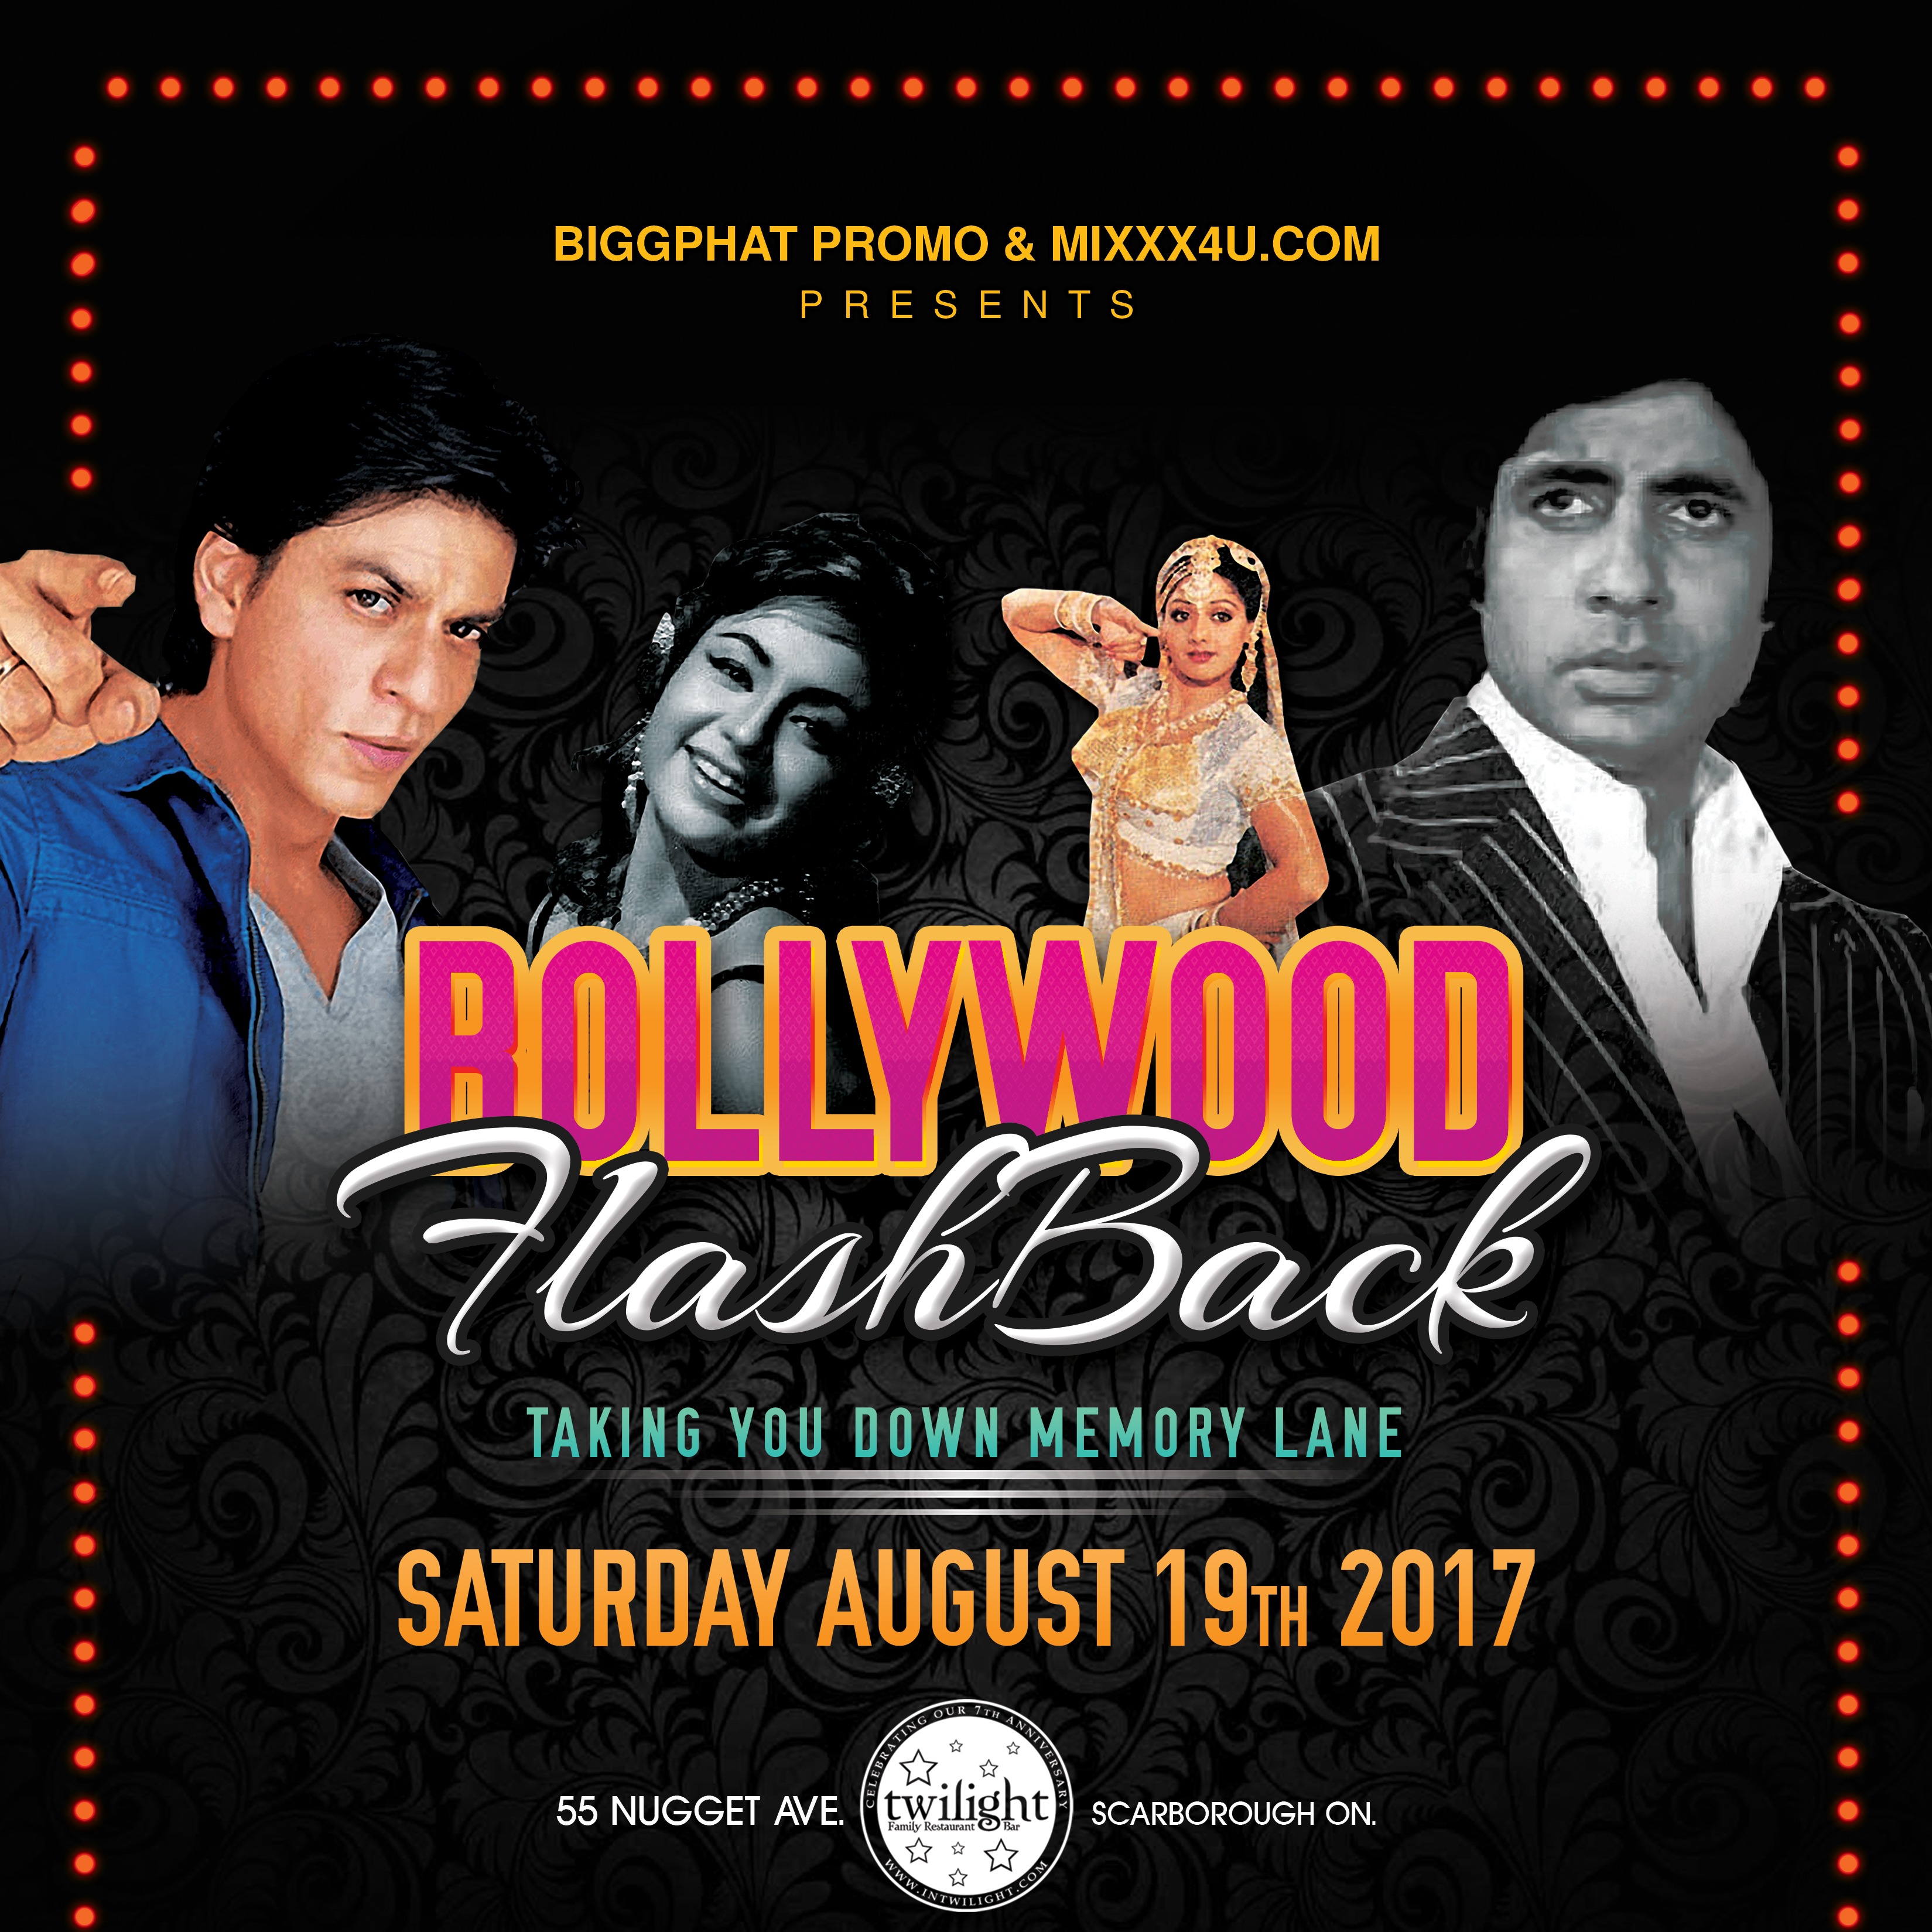 Bollywood Flash Back | Taking You Down Memory Lane